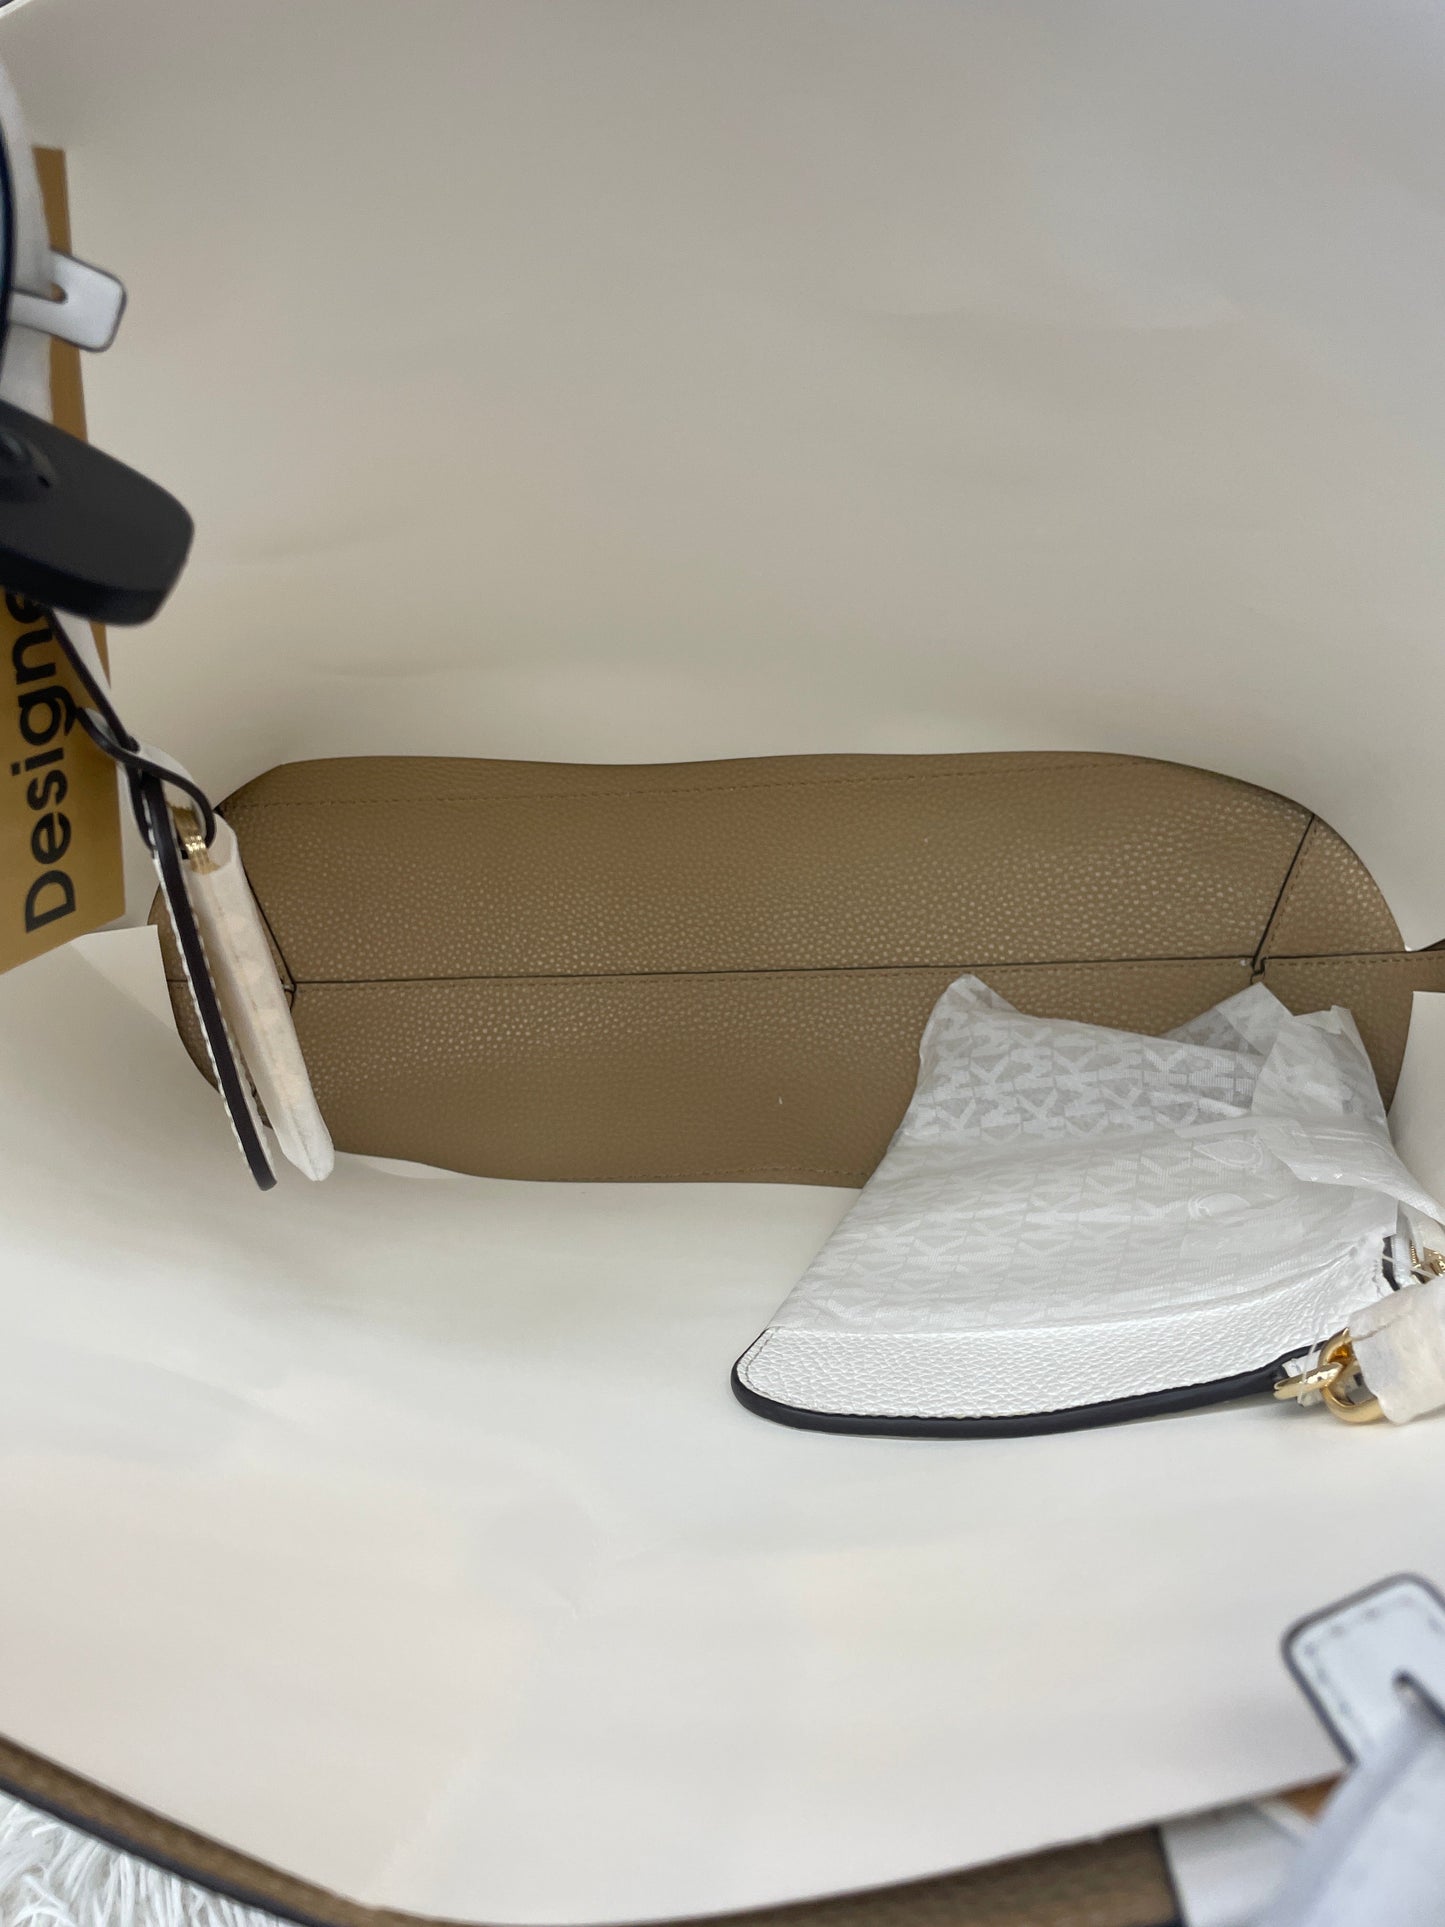 Handbag Leather Michael Kors, Size Large